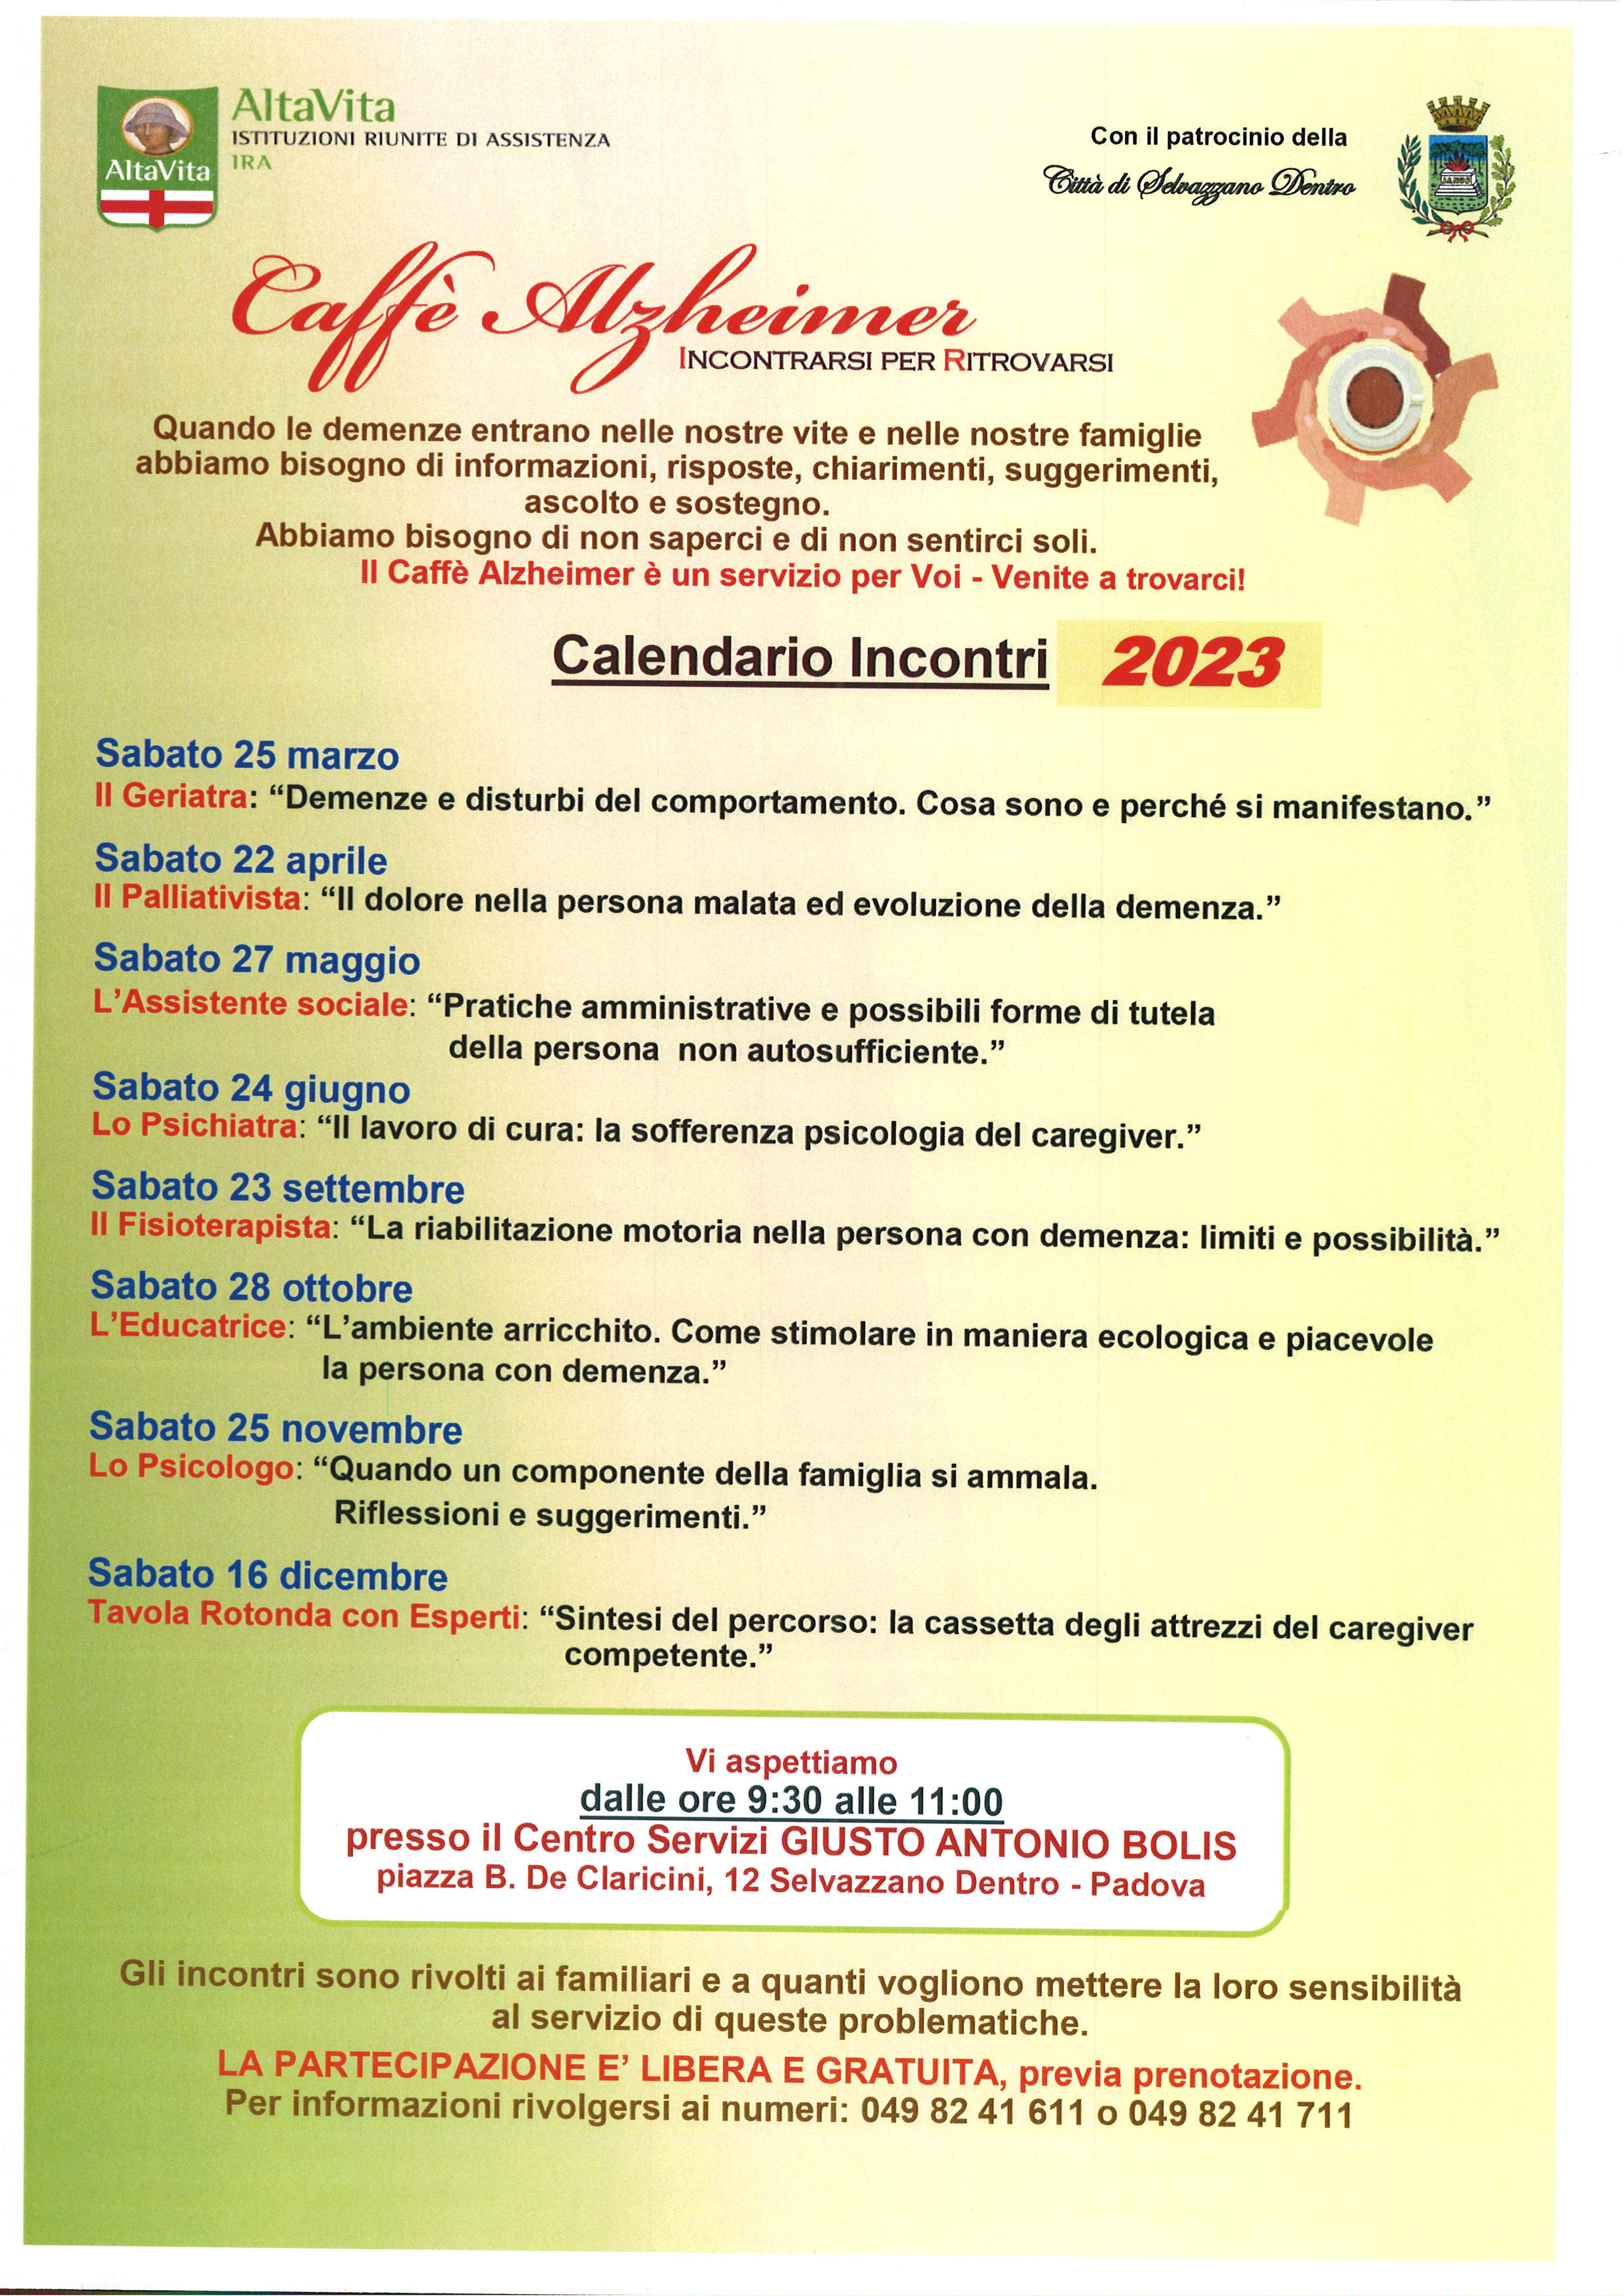 Calendario Incontri Caffe’ Alzheimer anno 2023 presso C.S. Bolis